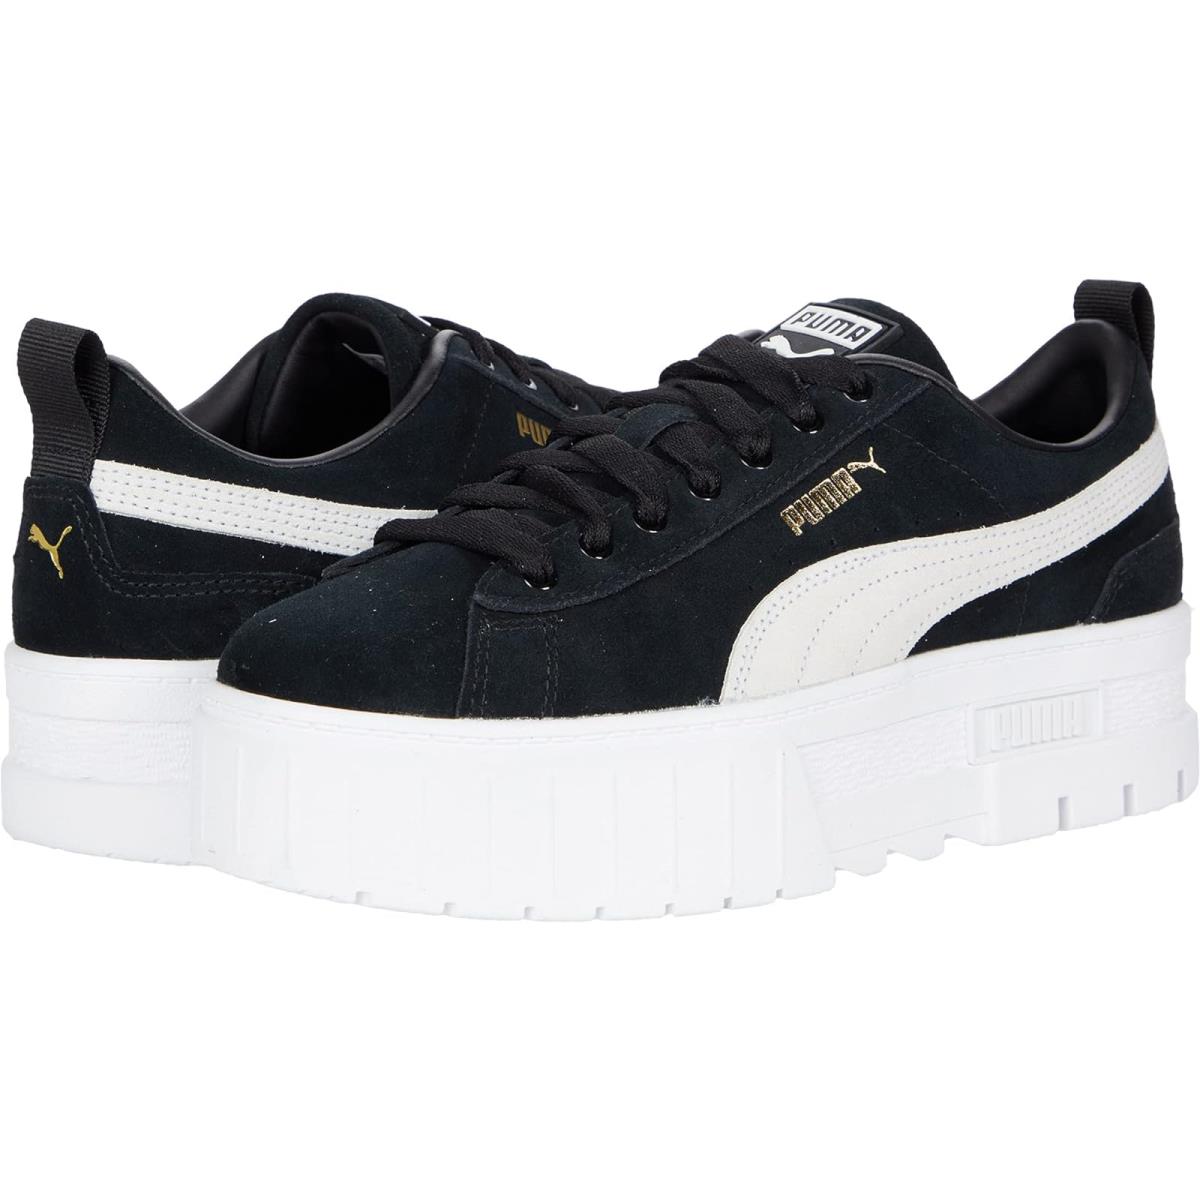 Woman`s Sneakers Athletic Shoes Puma Mayze Puma Black/Puma White